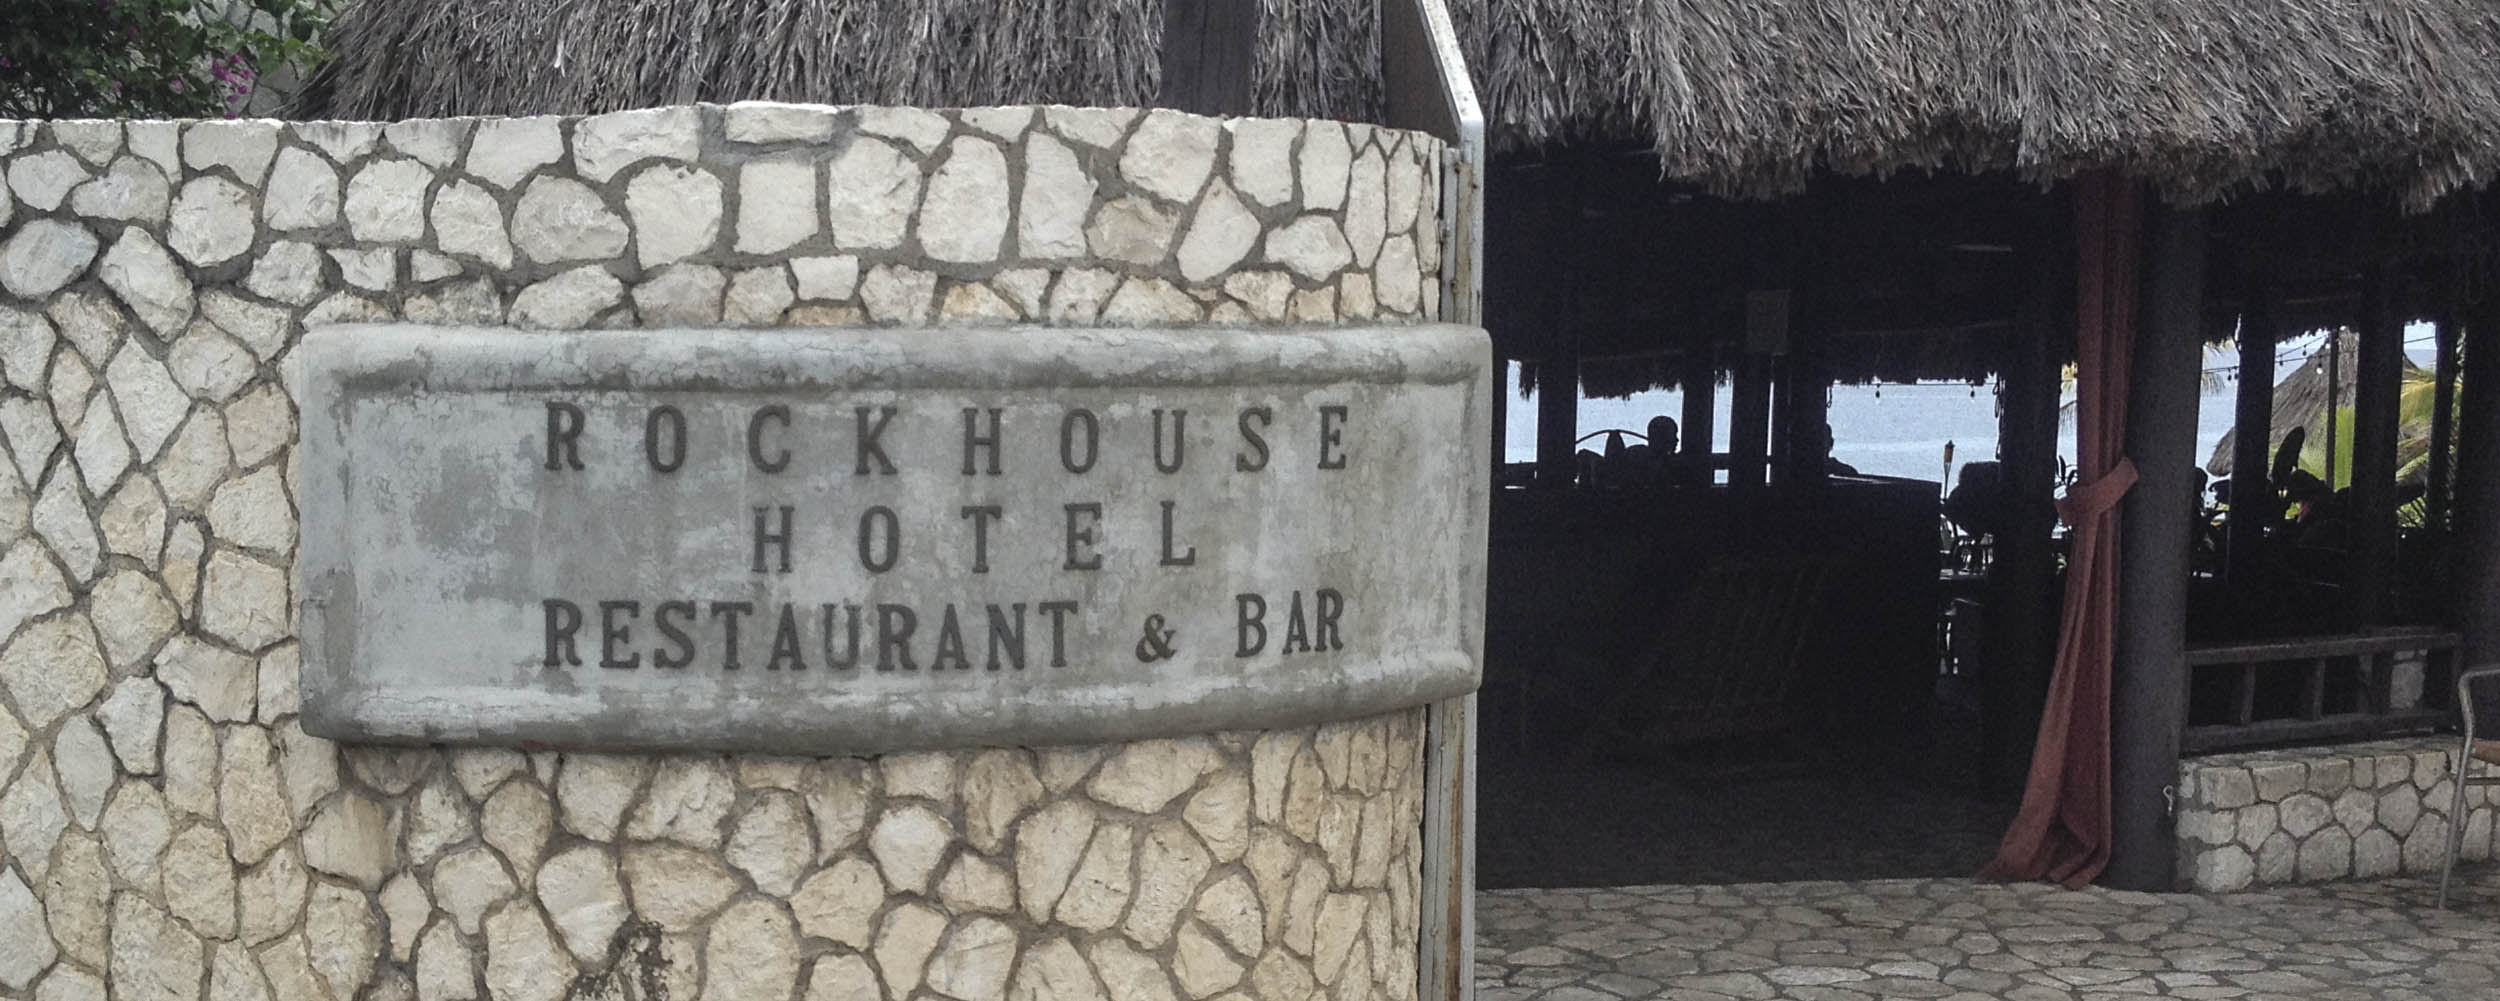 Rockhouse Hotel - Negril Jamaica